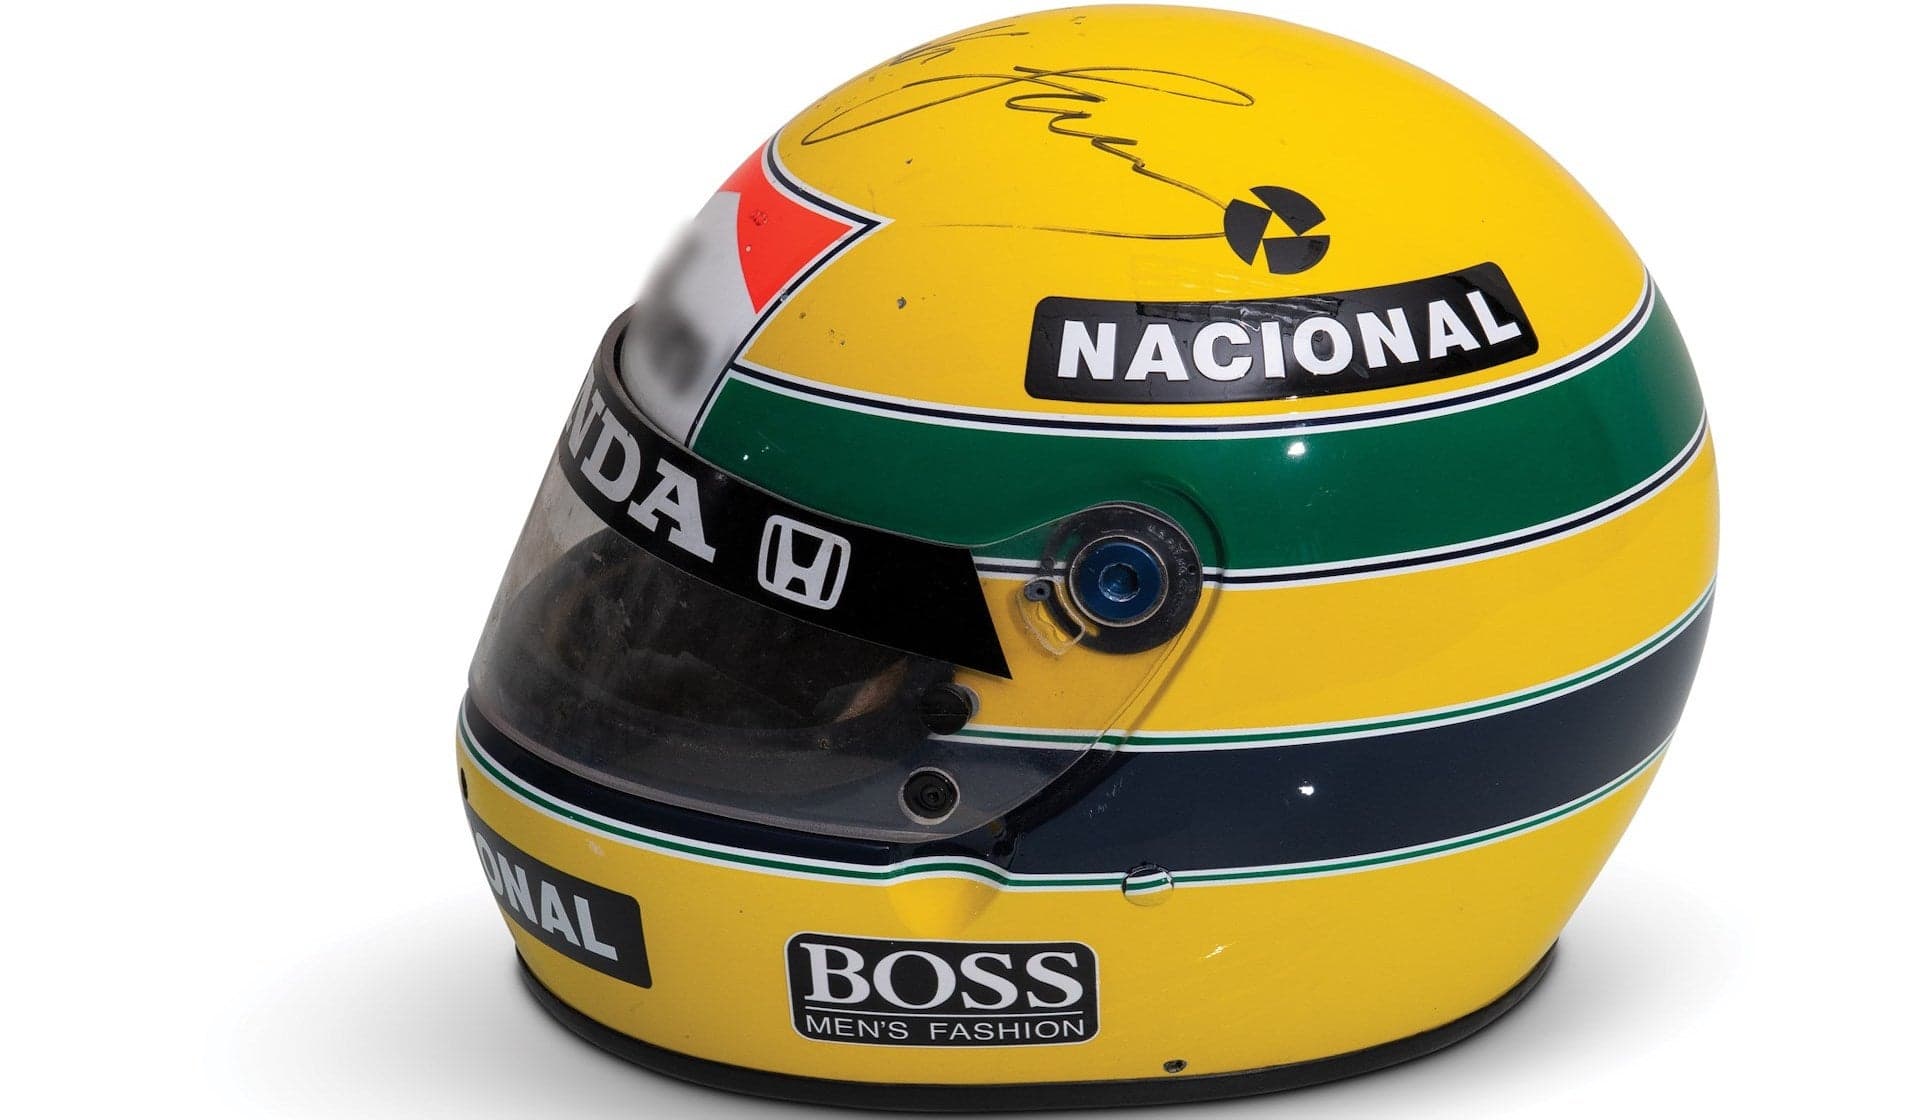 Signed Ayrton Senna 1988 McLaren-Honda Helmet Sells for $102,000 at Auction